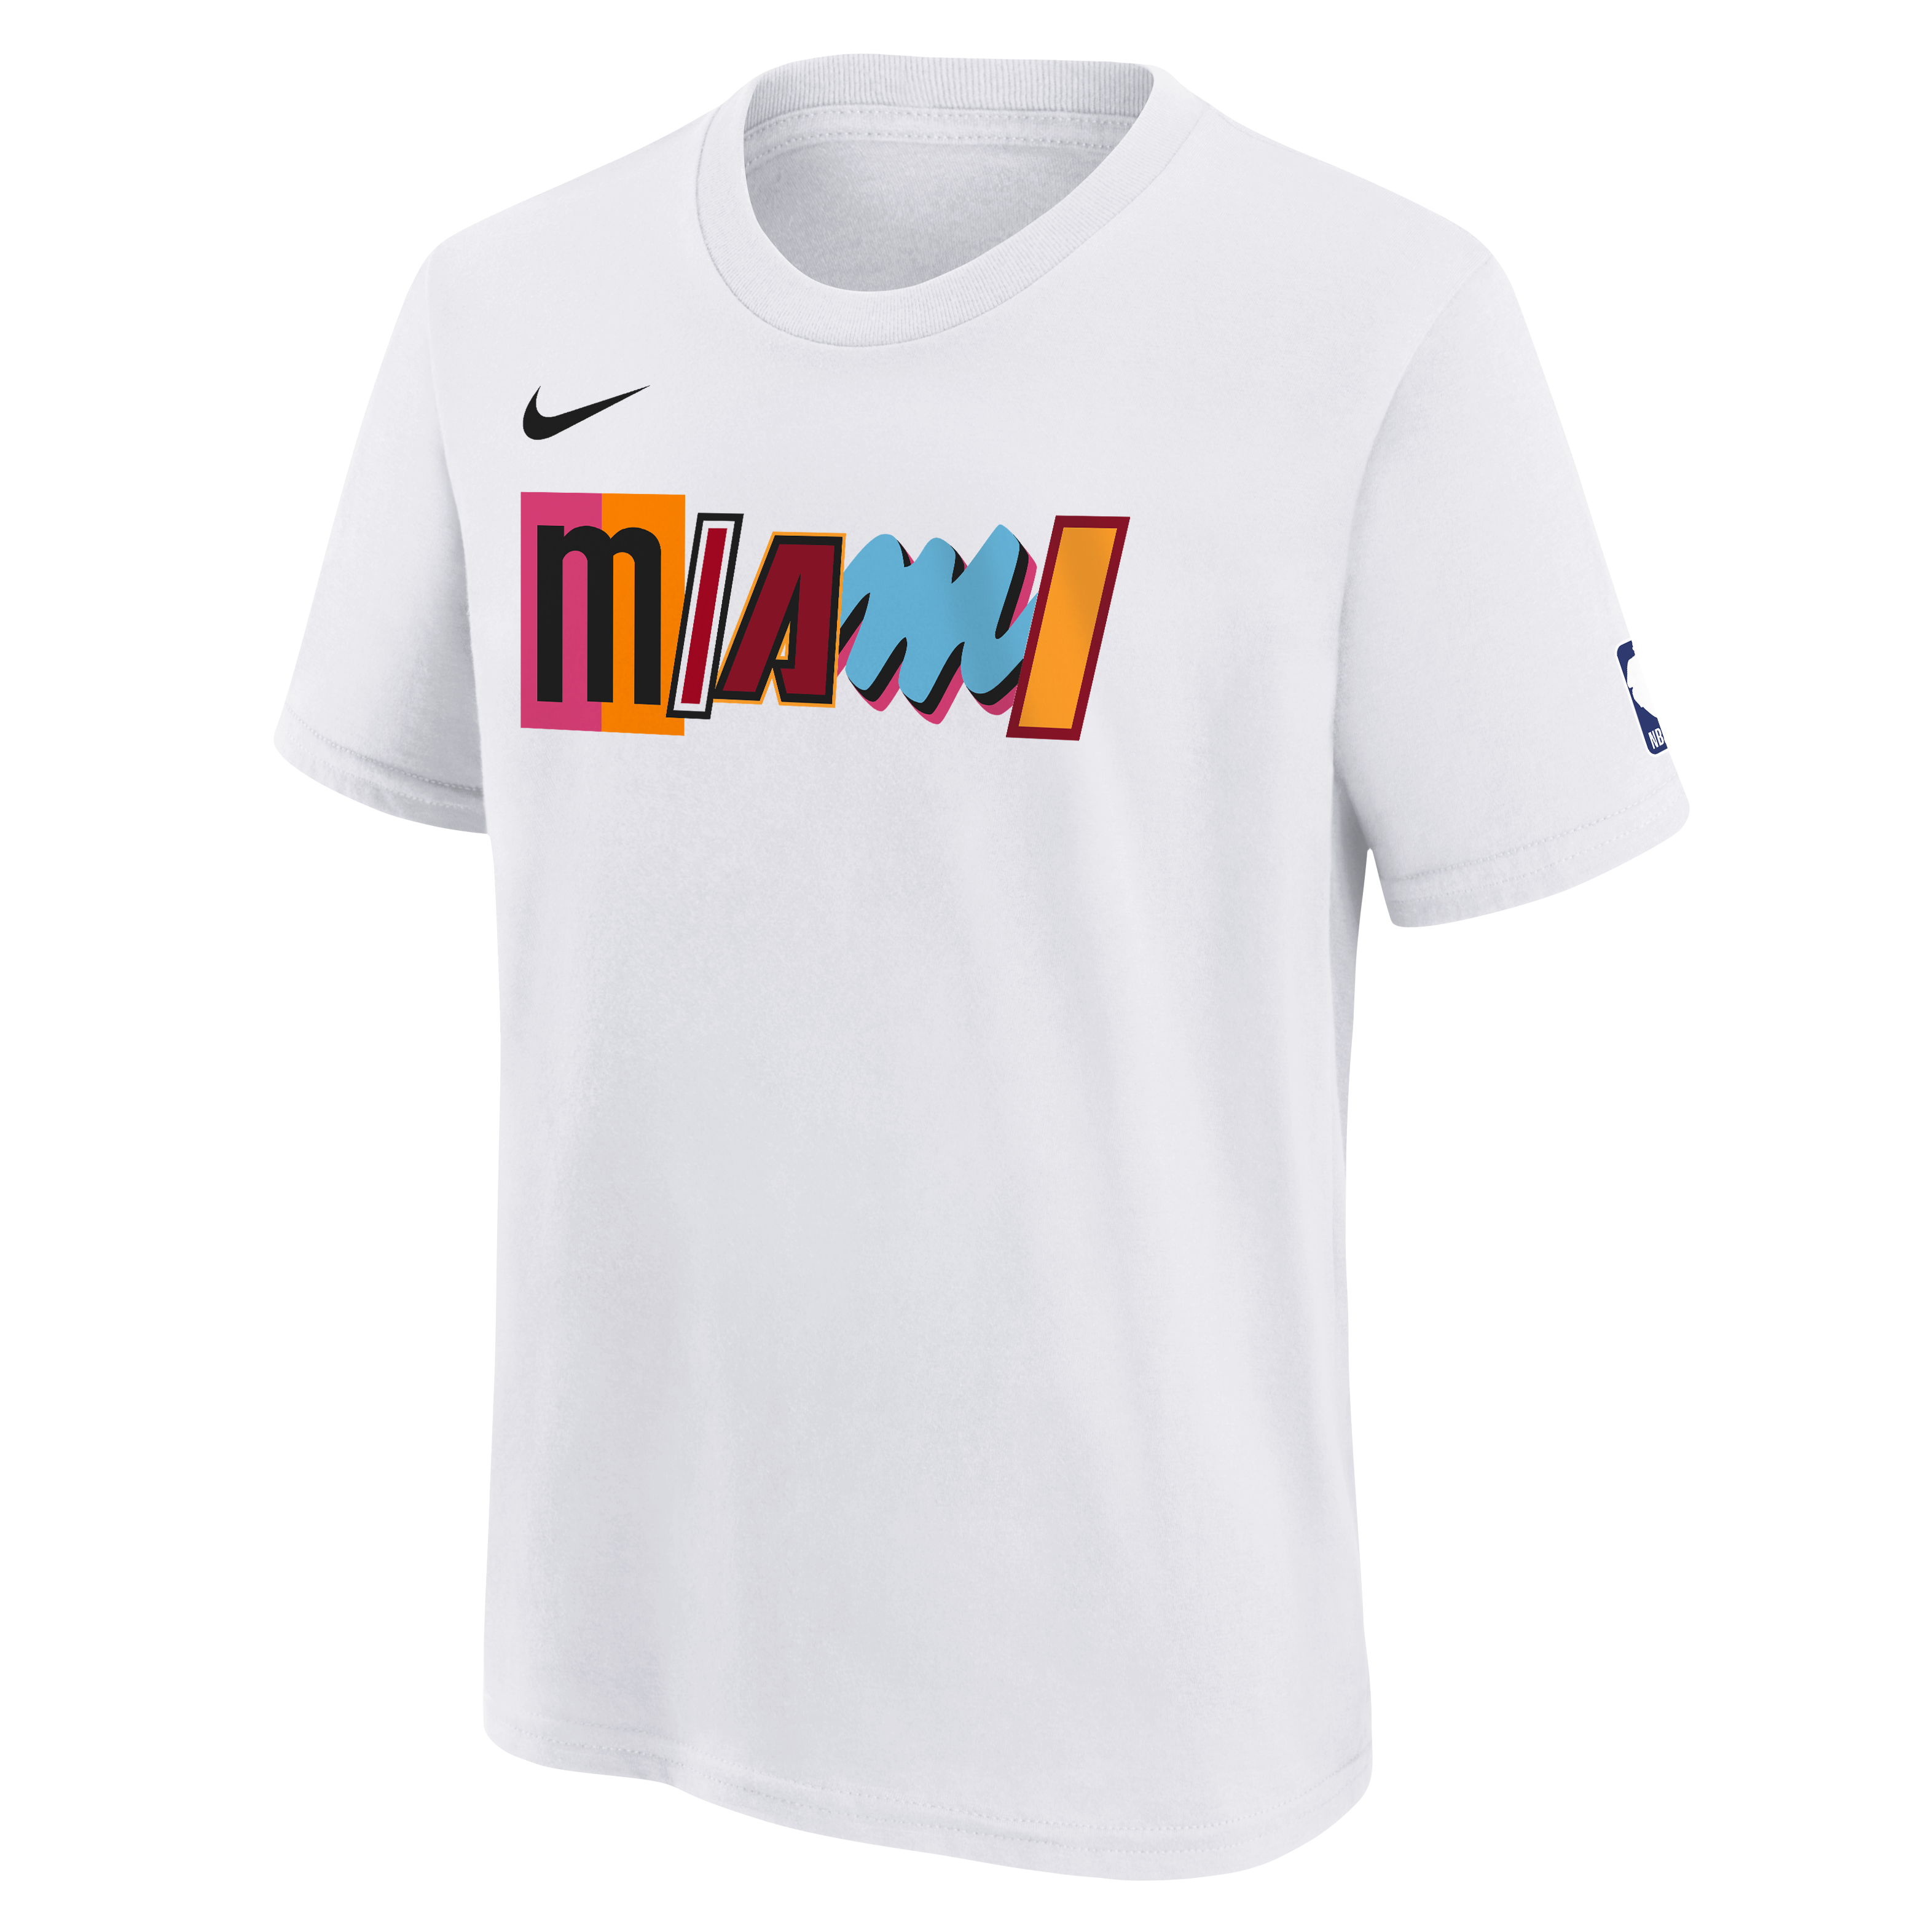 THE MIAMI HEAT STORE - 27 Reviews - 601 Biscayne Blvd, Miami